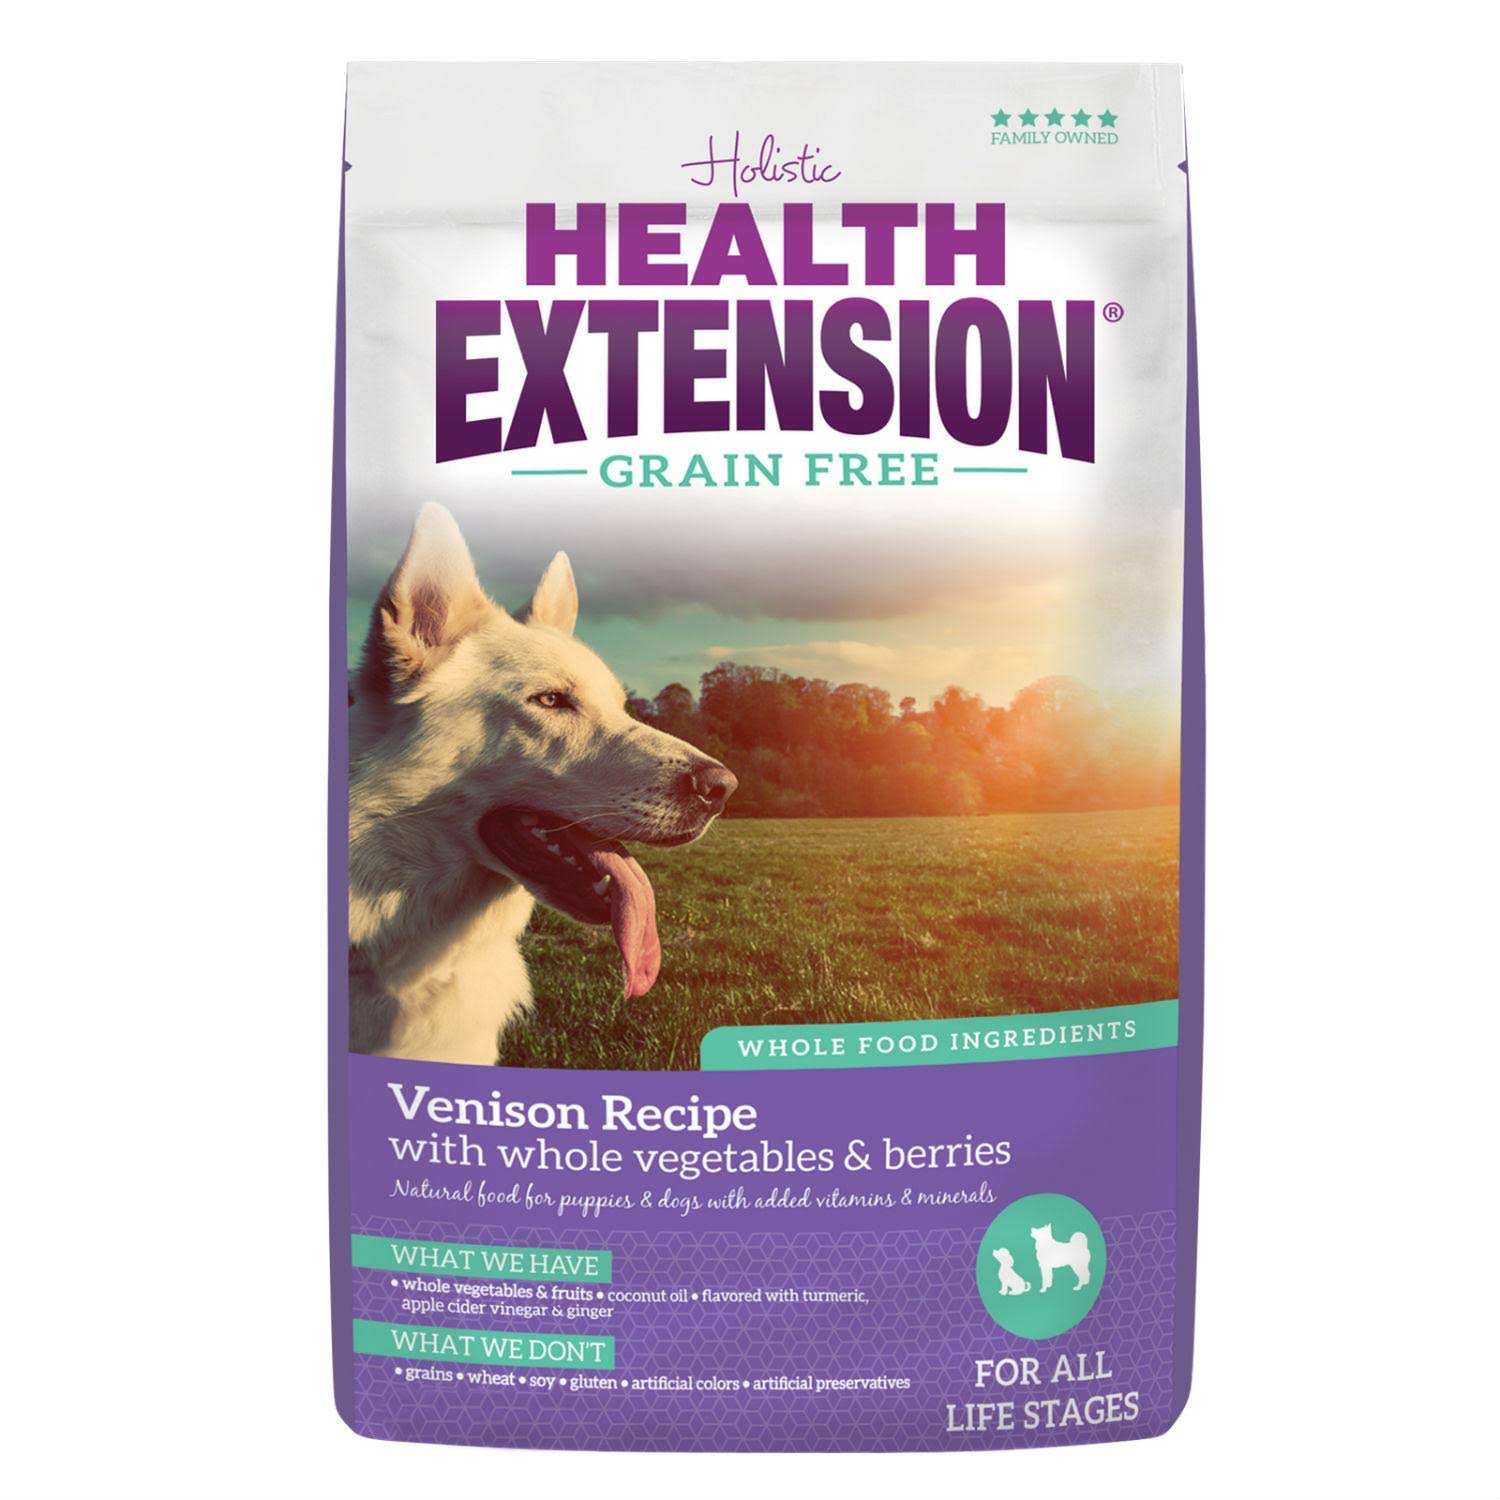 Health Extension Grain Free Venison Recipe Dog Food